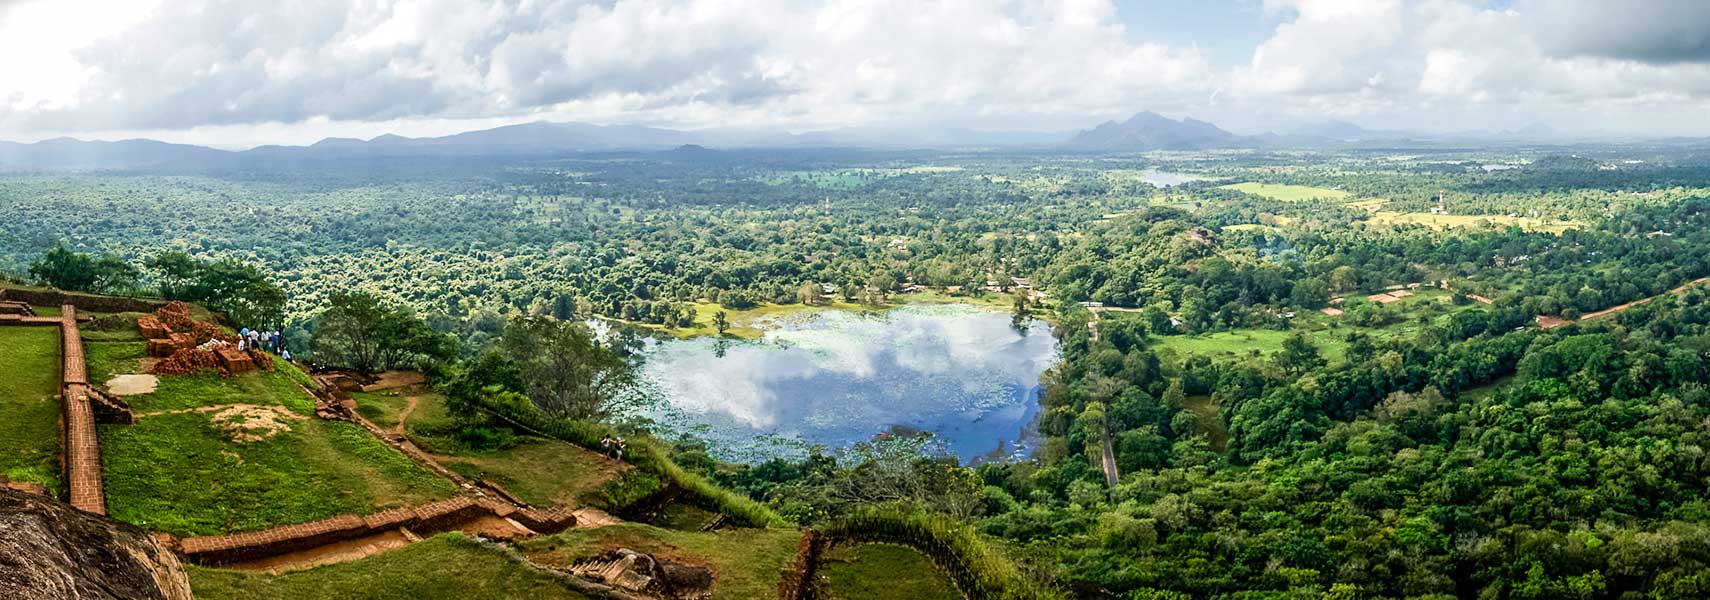 View from Sigiriya, Matale District, Sri Lanka 